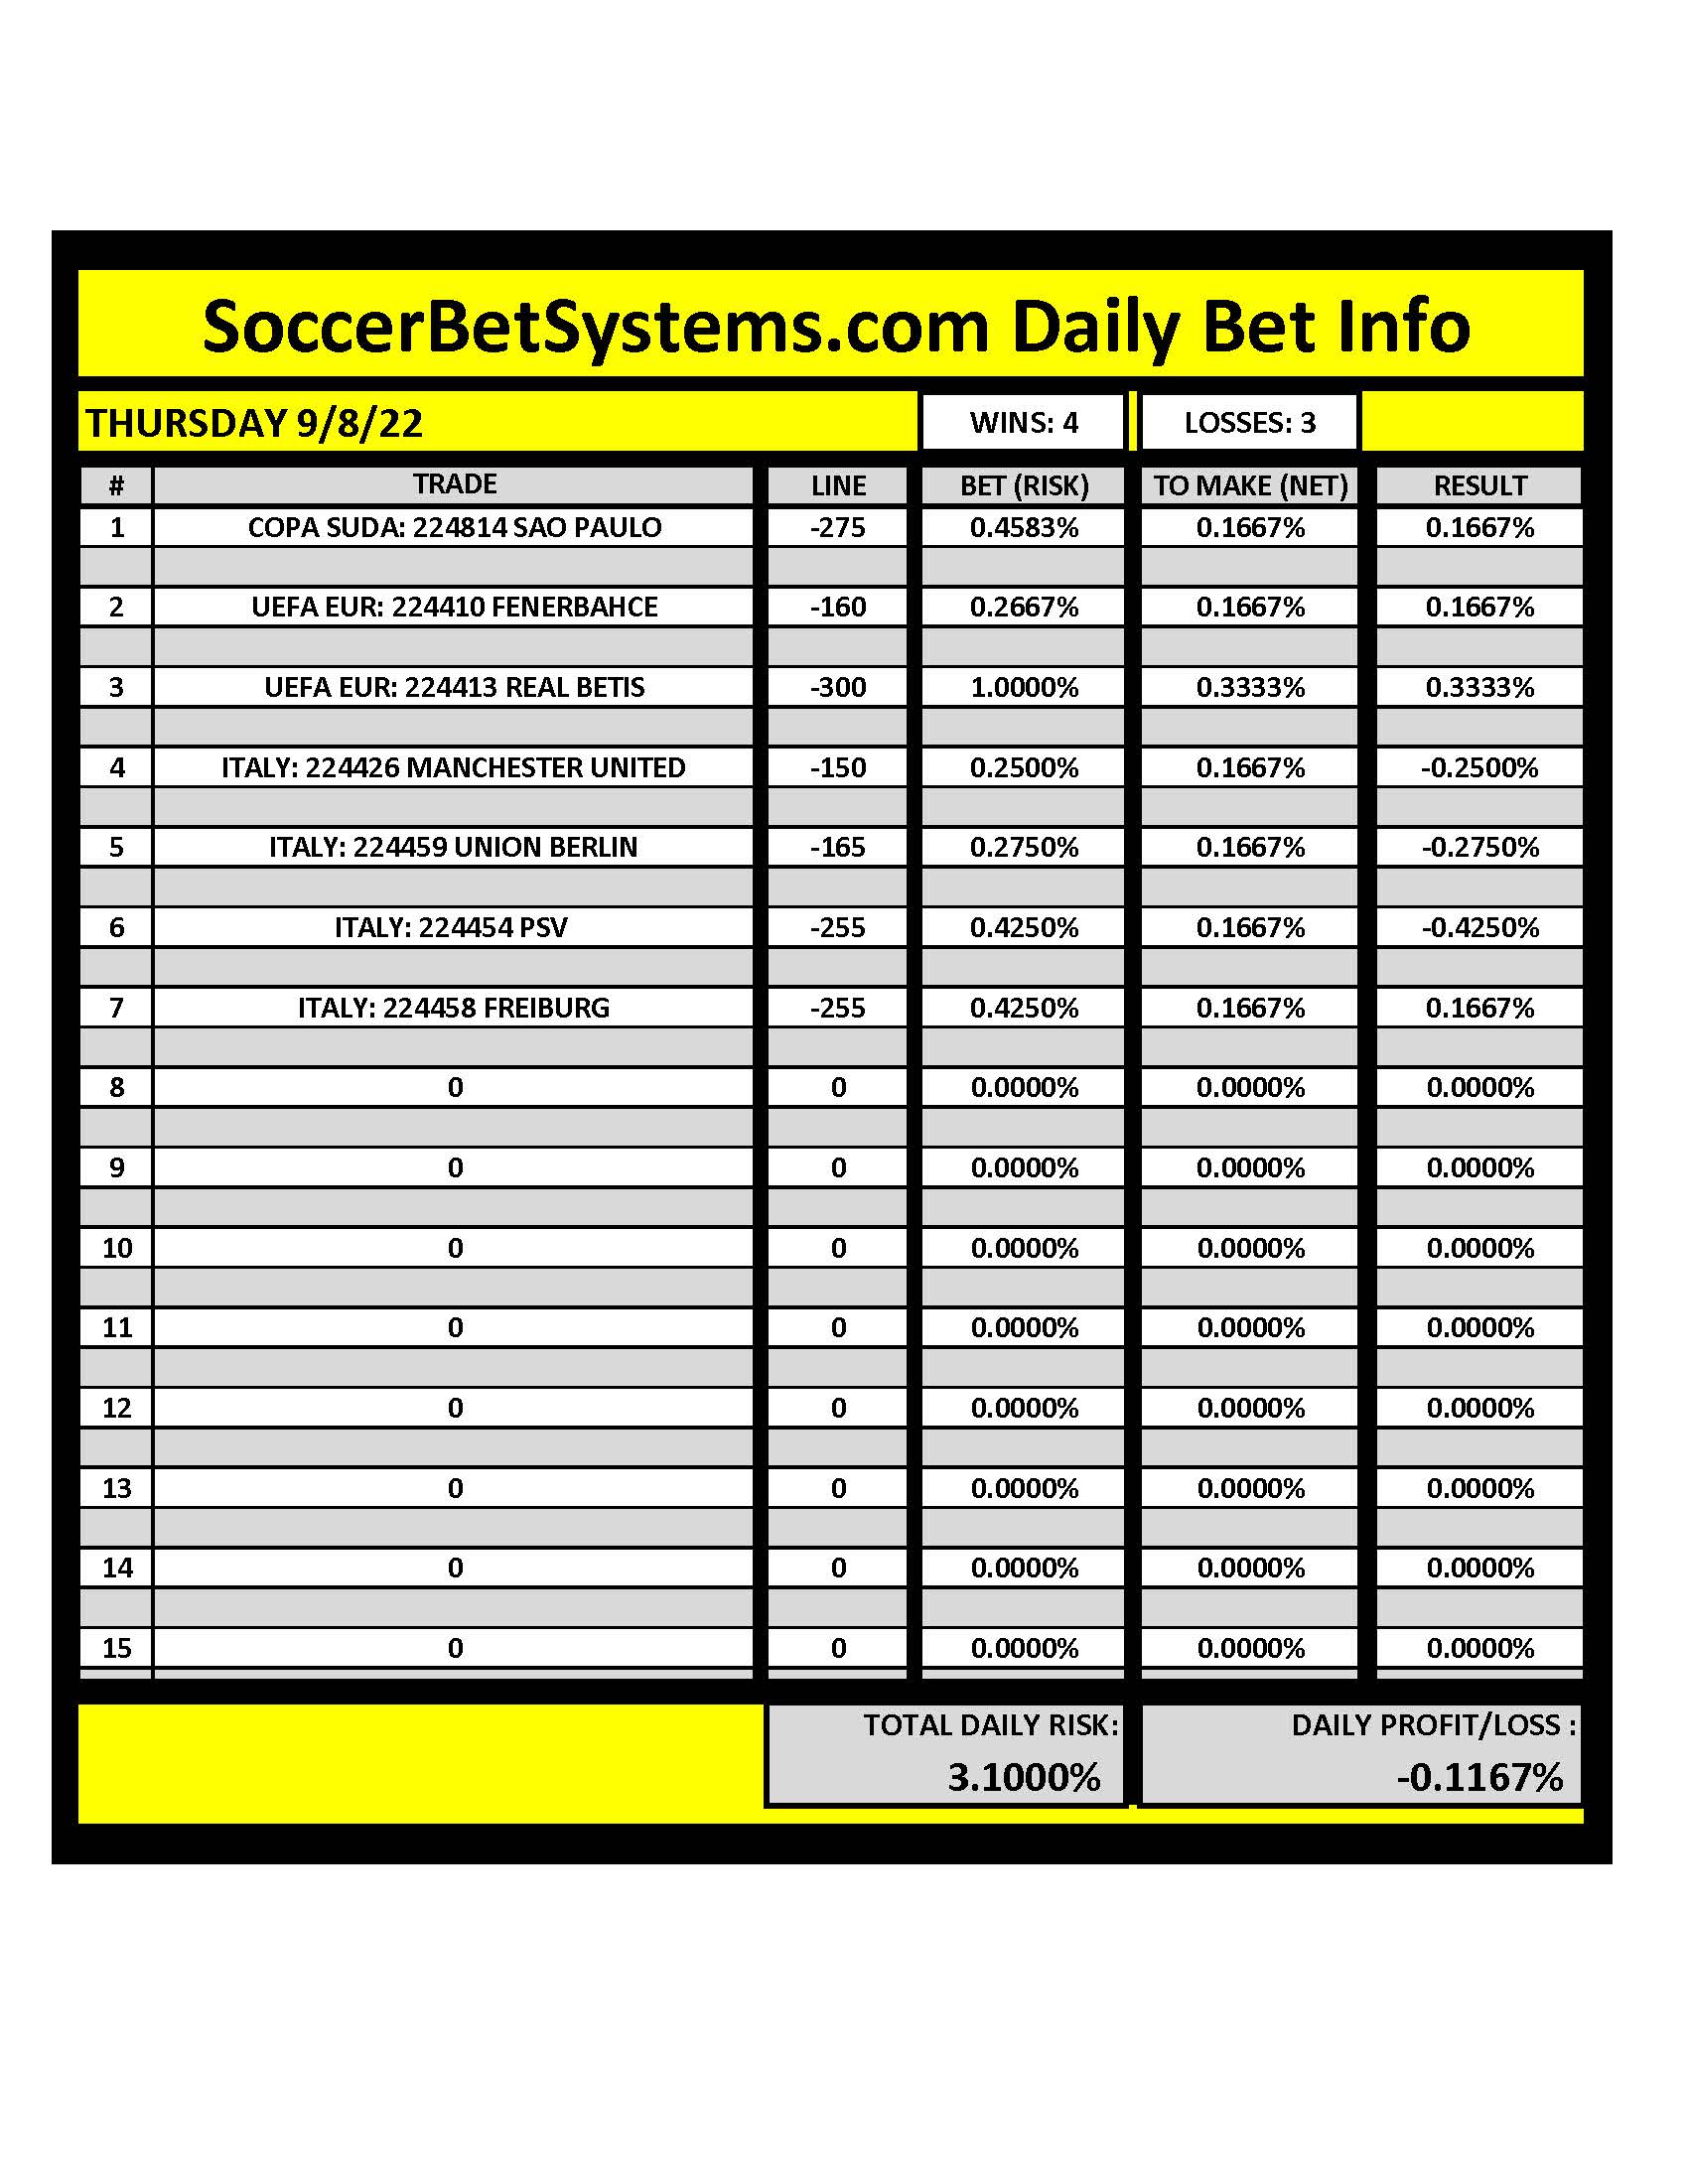 SoccerBetSystems.com 9/8/22 Daily Results